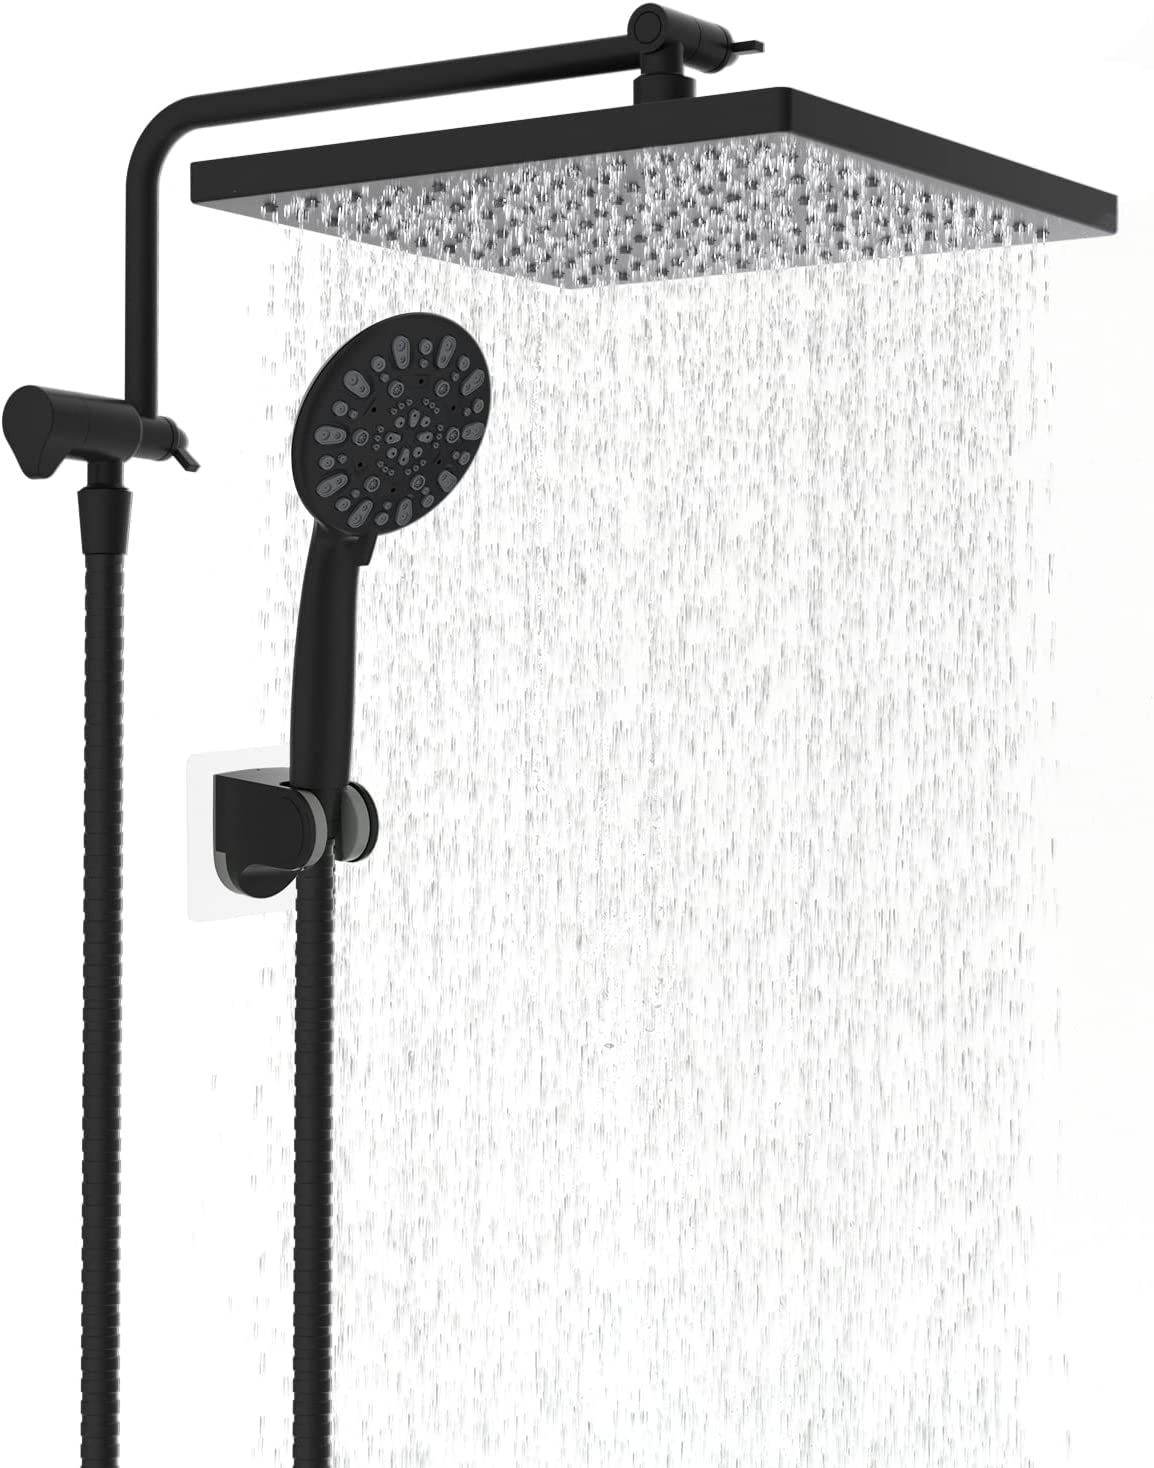 Hibbent Hibbent Rainfall Shower Head Combo 10'' High Pressure Shower Head with Handheld Shower Head